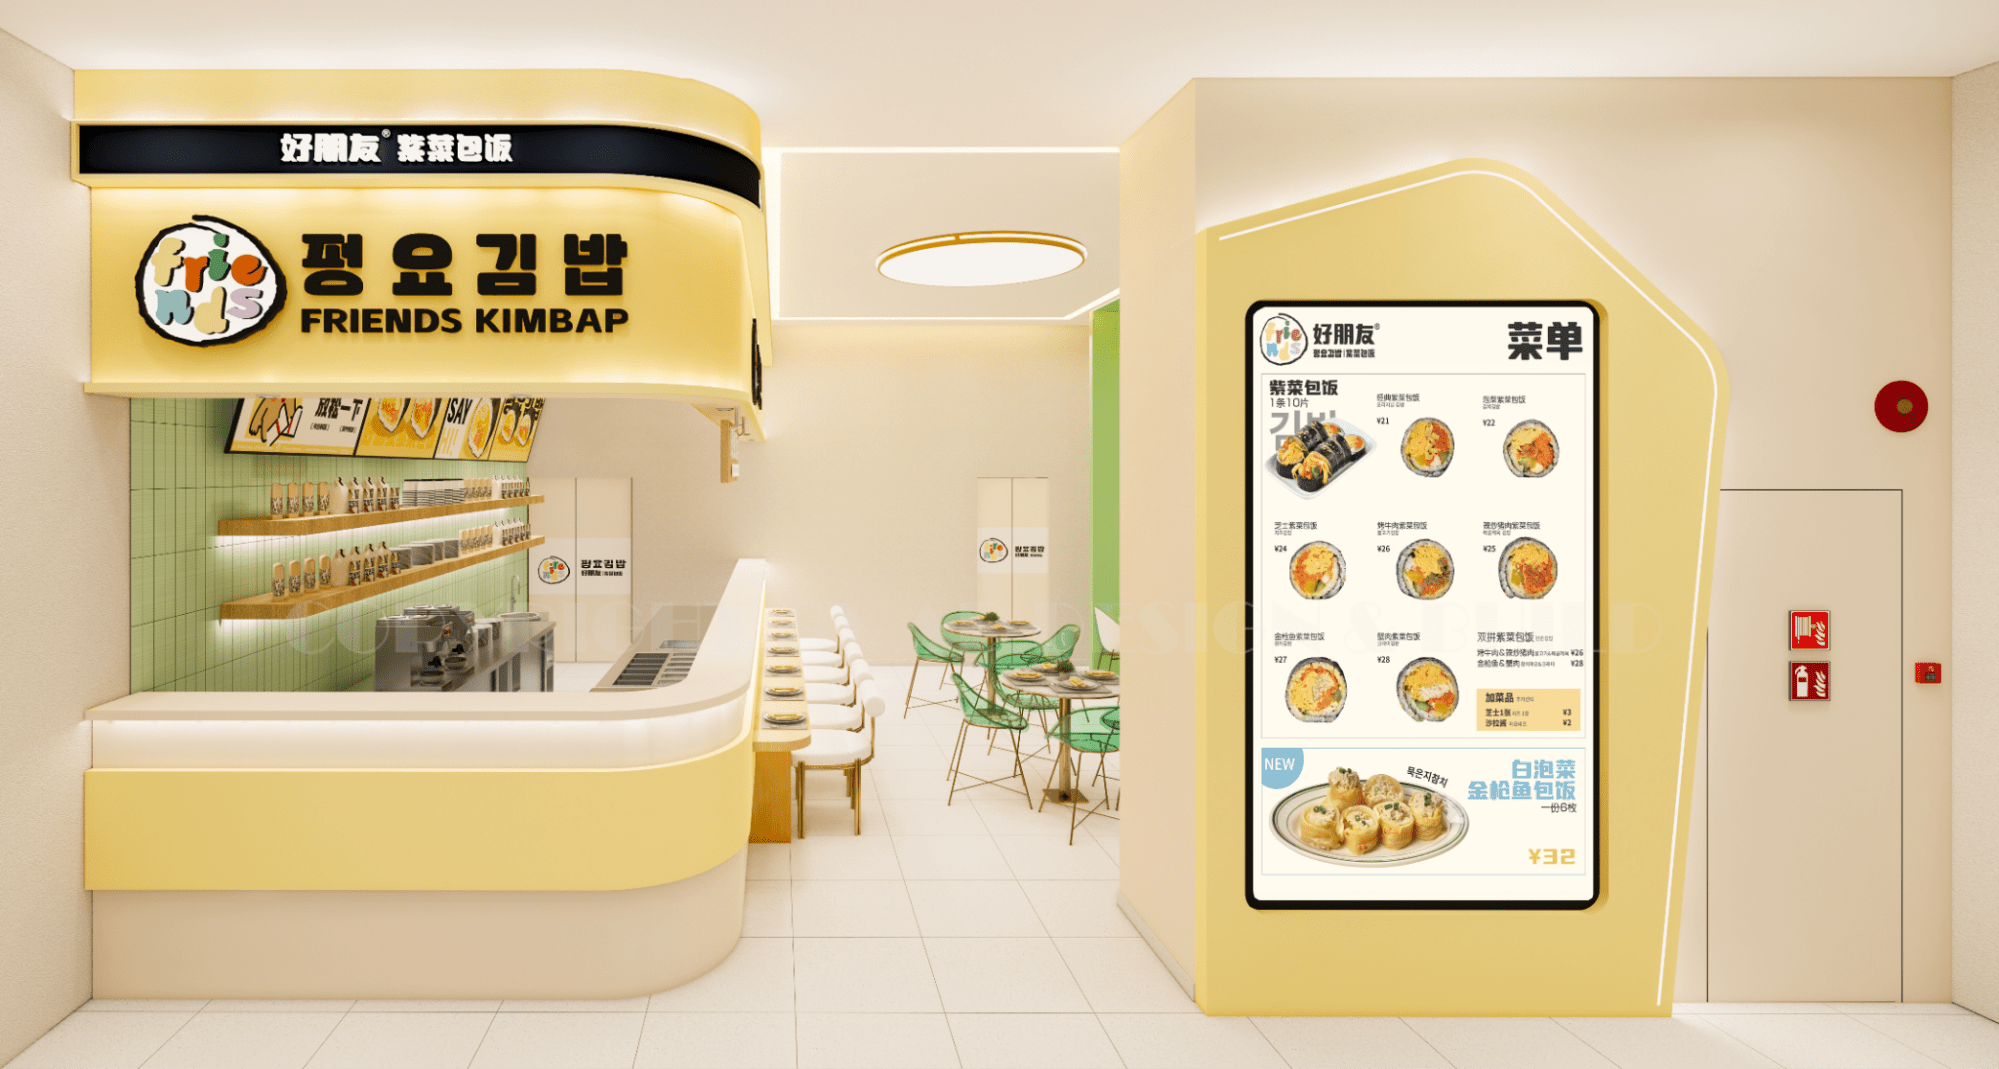 New cafes & restauants in oct 2023 - Friends Kimbap Exterior